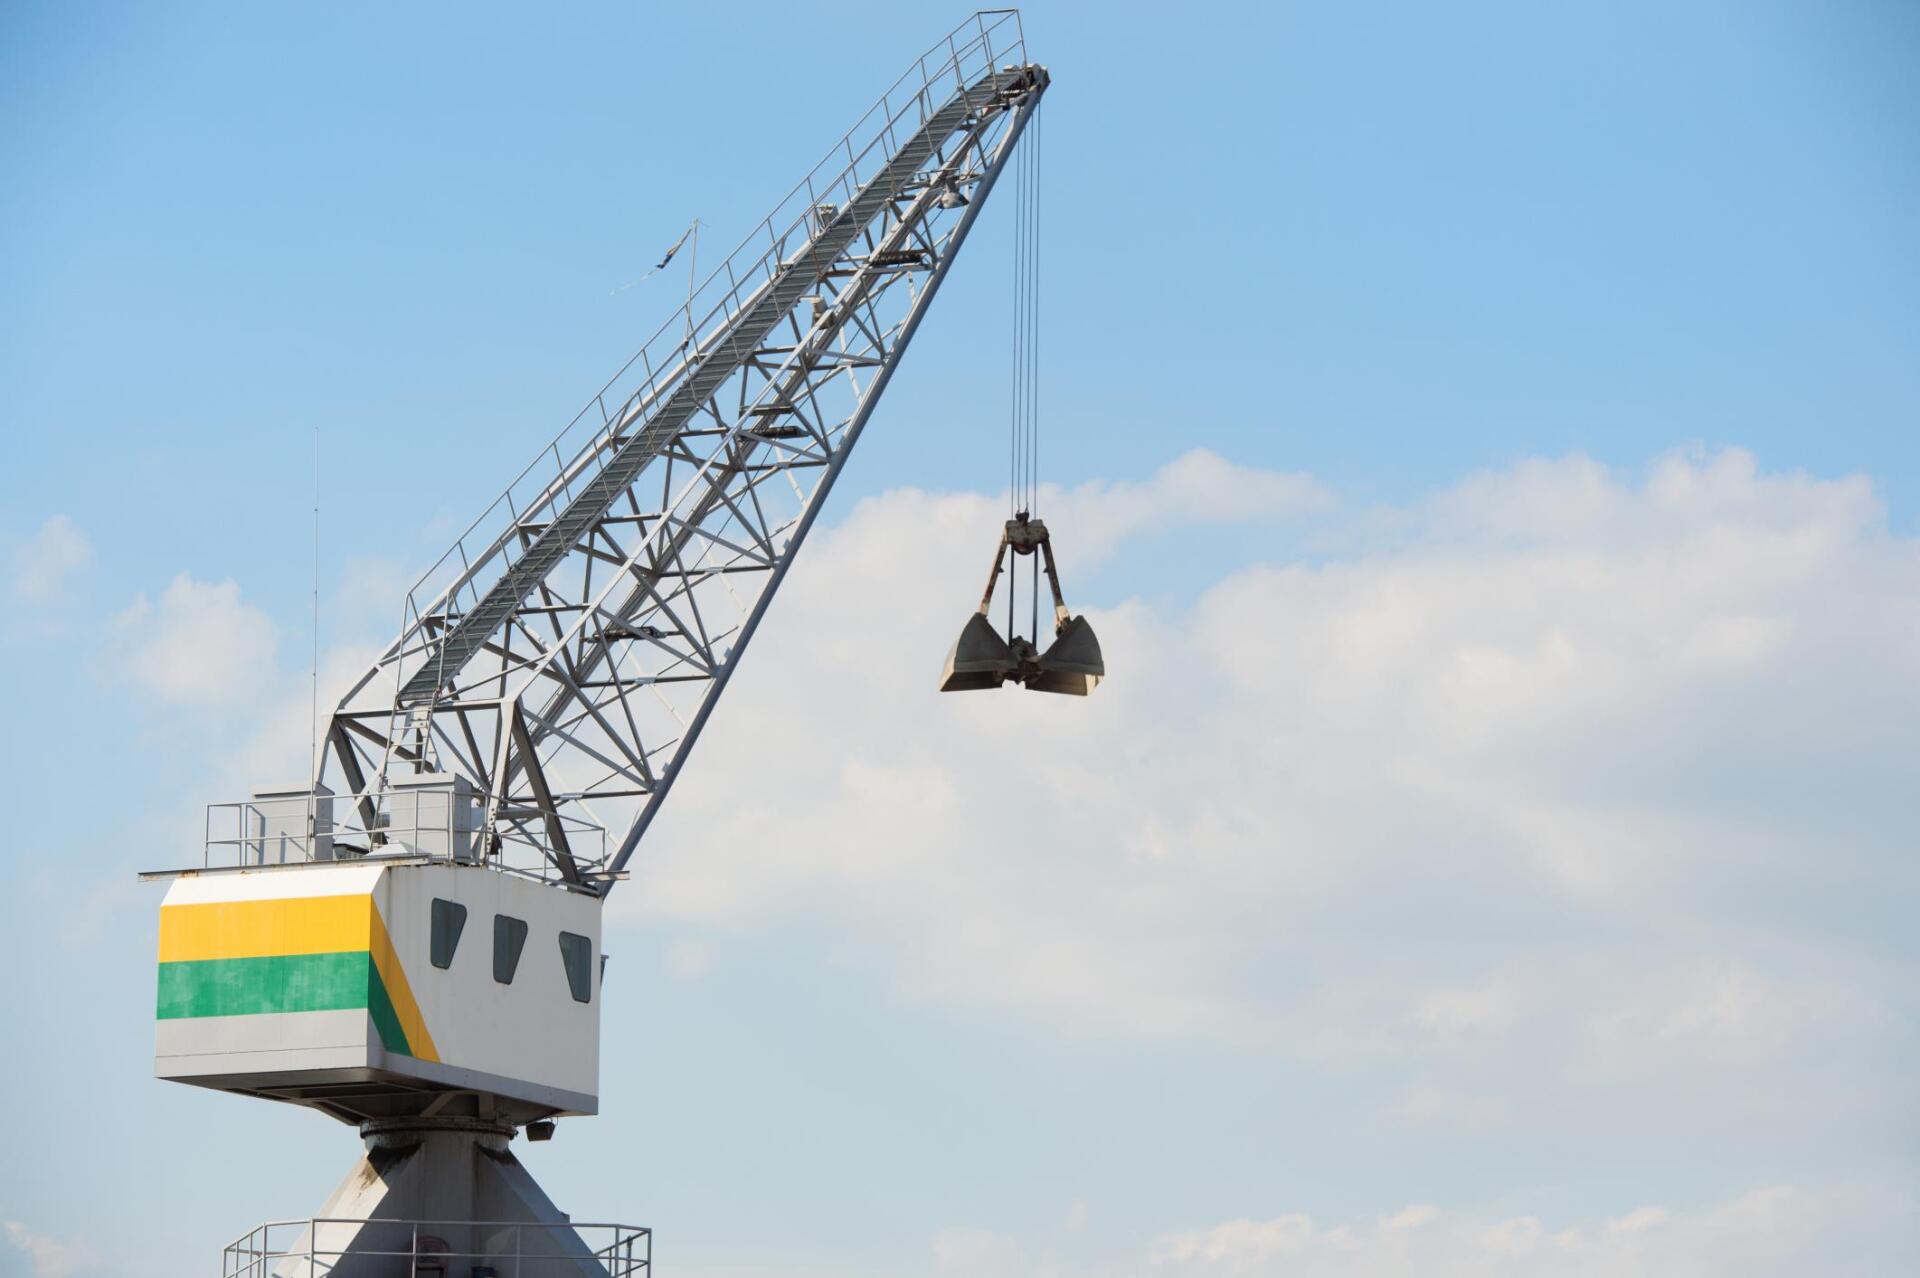 a crane lifting something